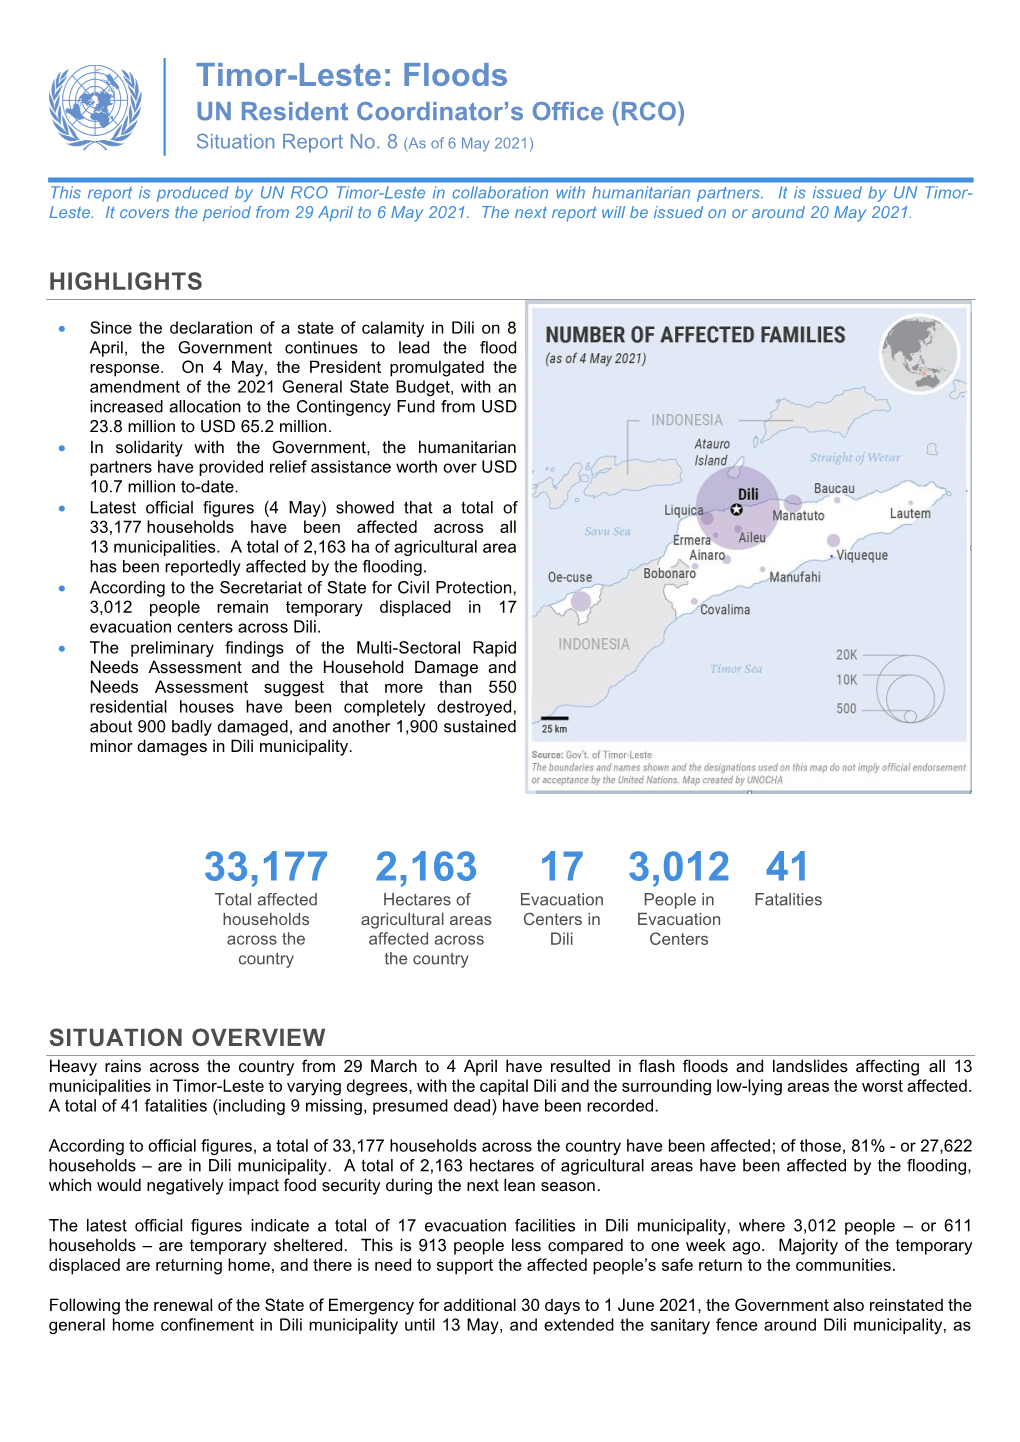 Timor-Leste: Floods UN Resident Coordinator’S Office (RCO) Situation Report No